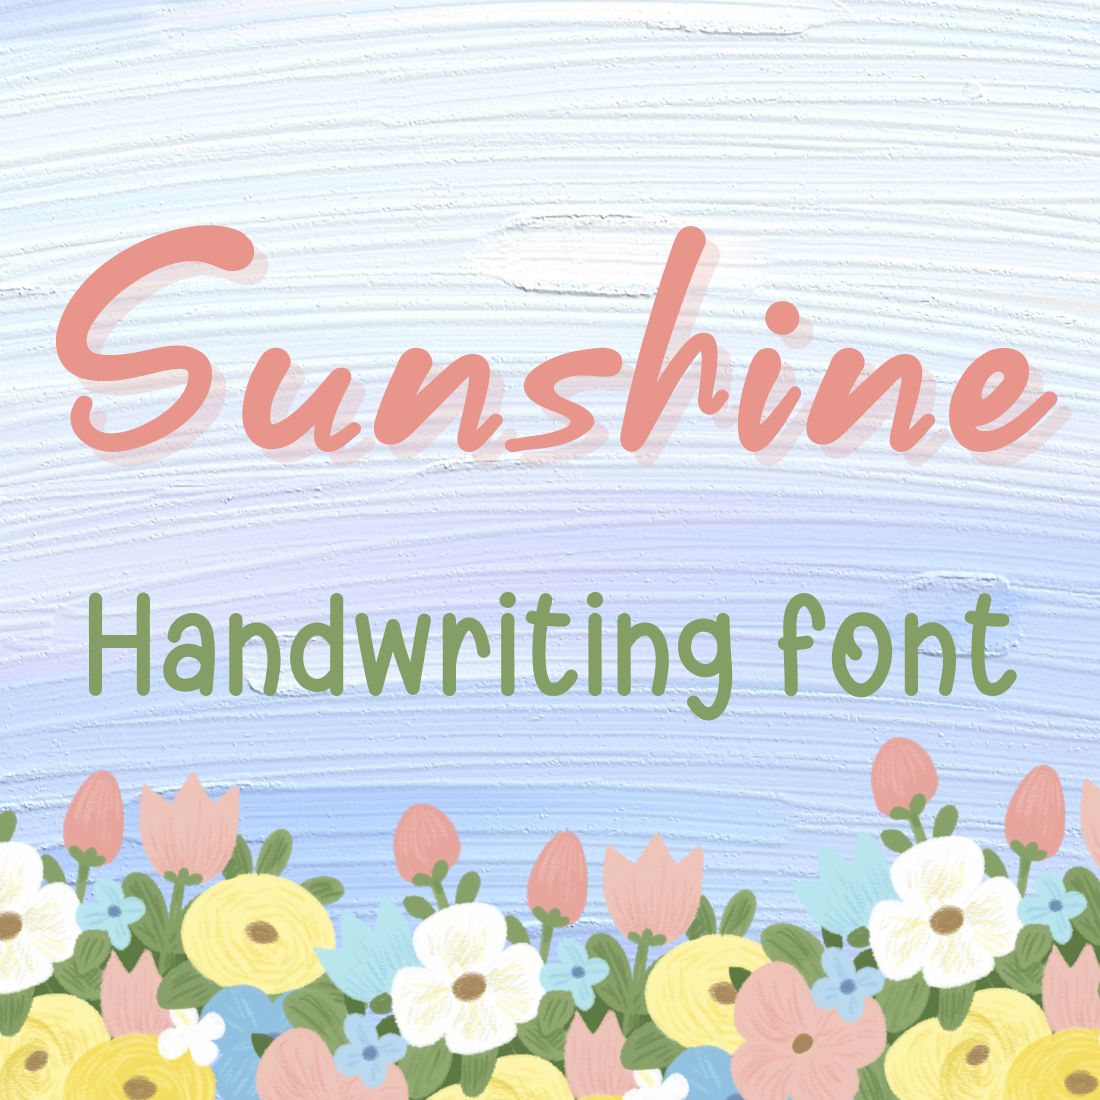 Sunshine - Handwriting font cover image.